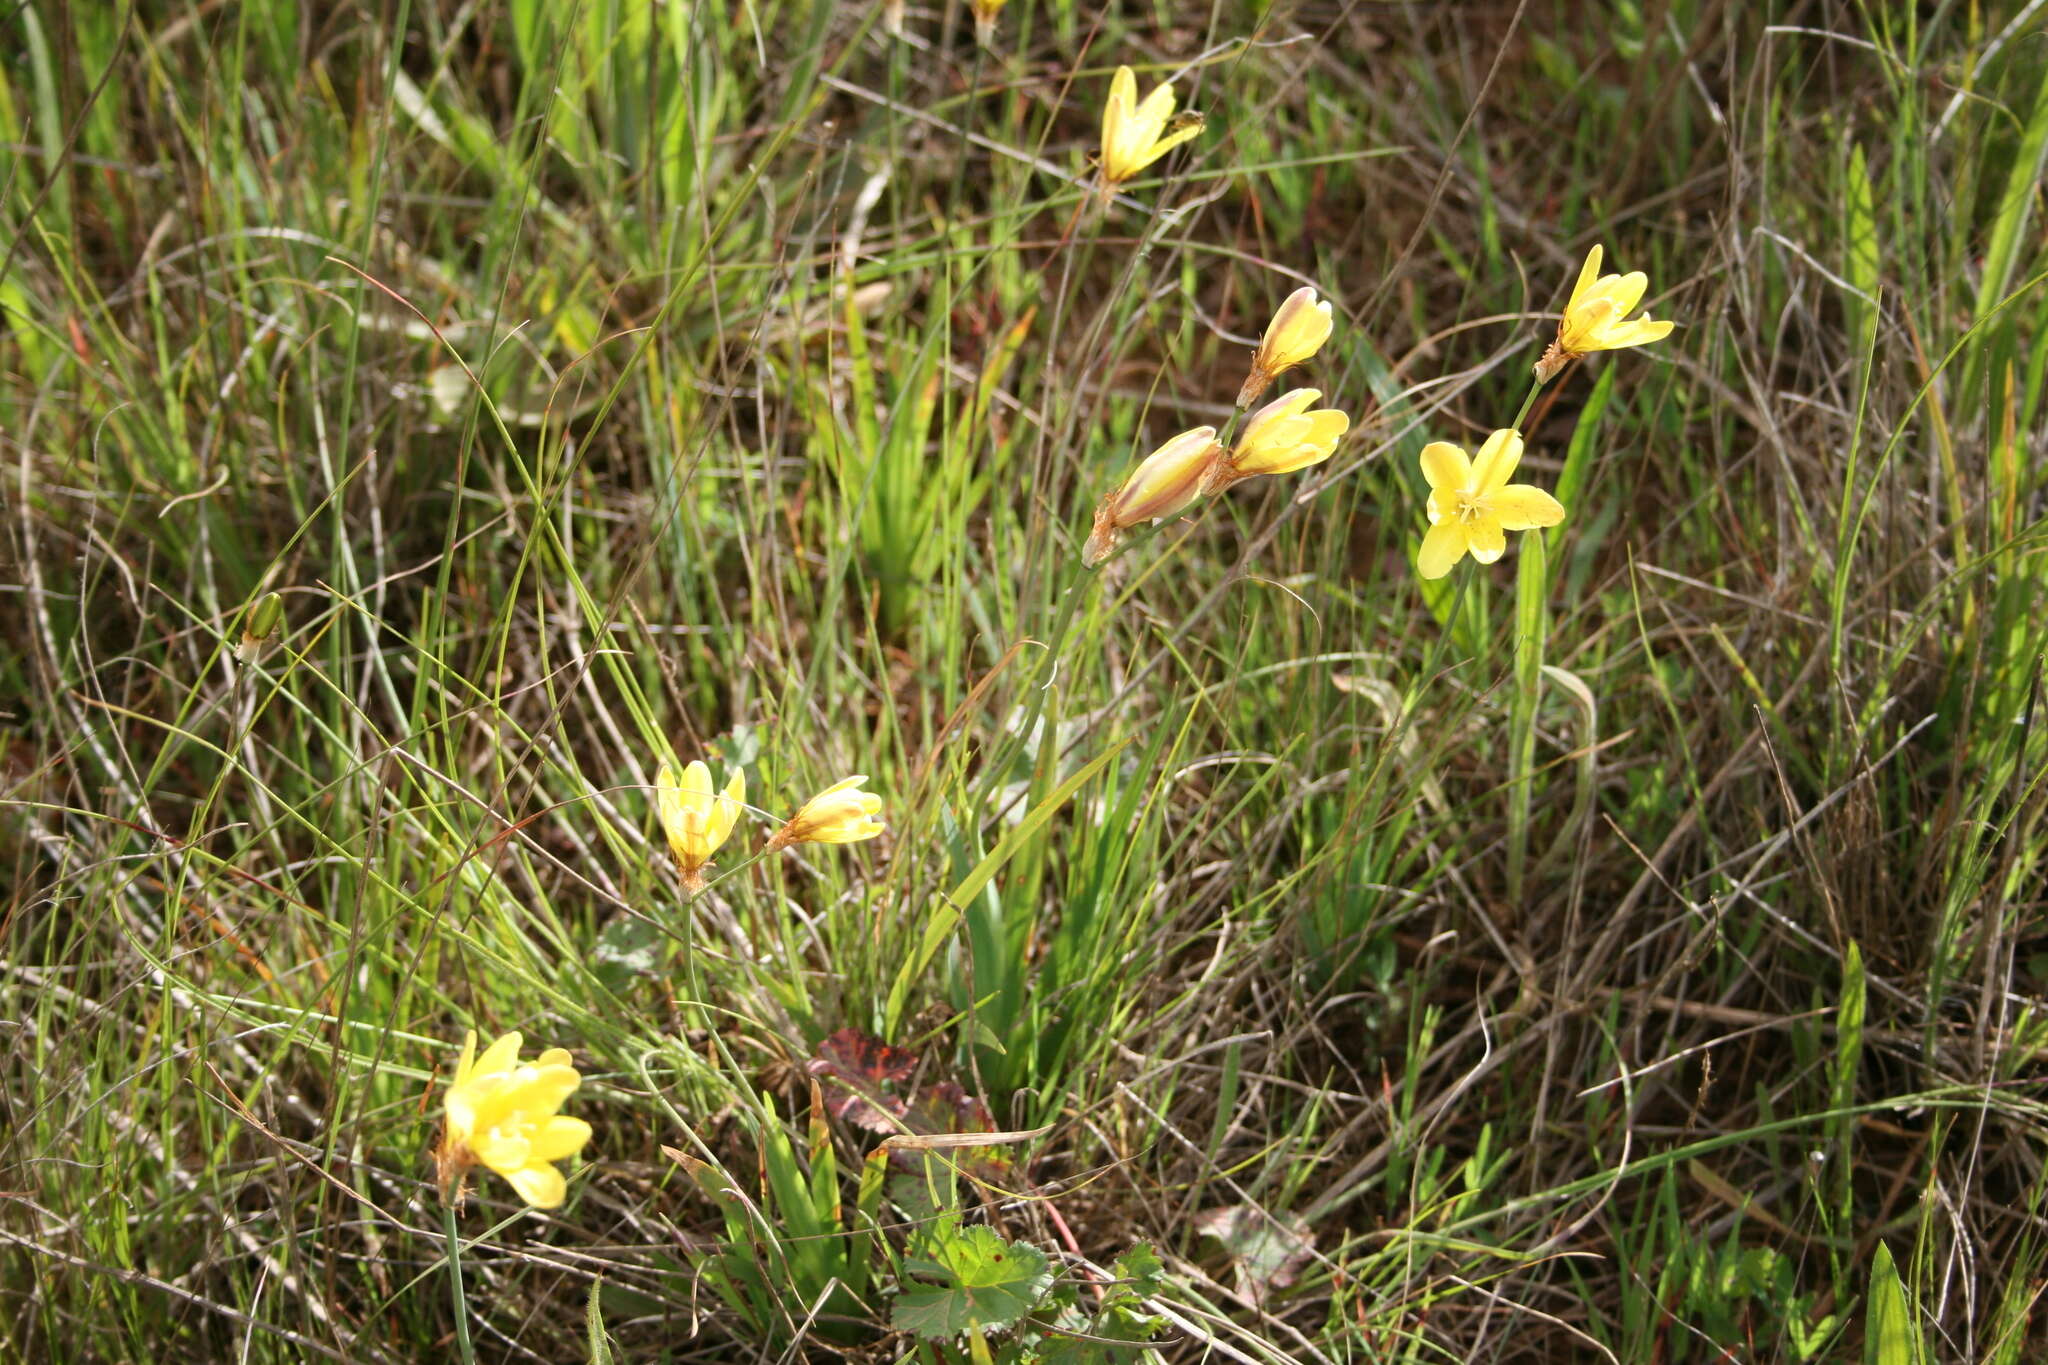 Image of fragrant wandflower